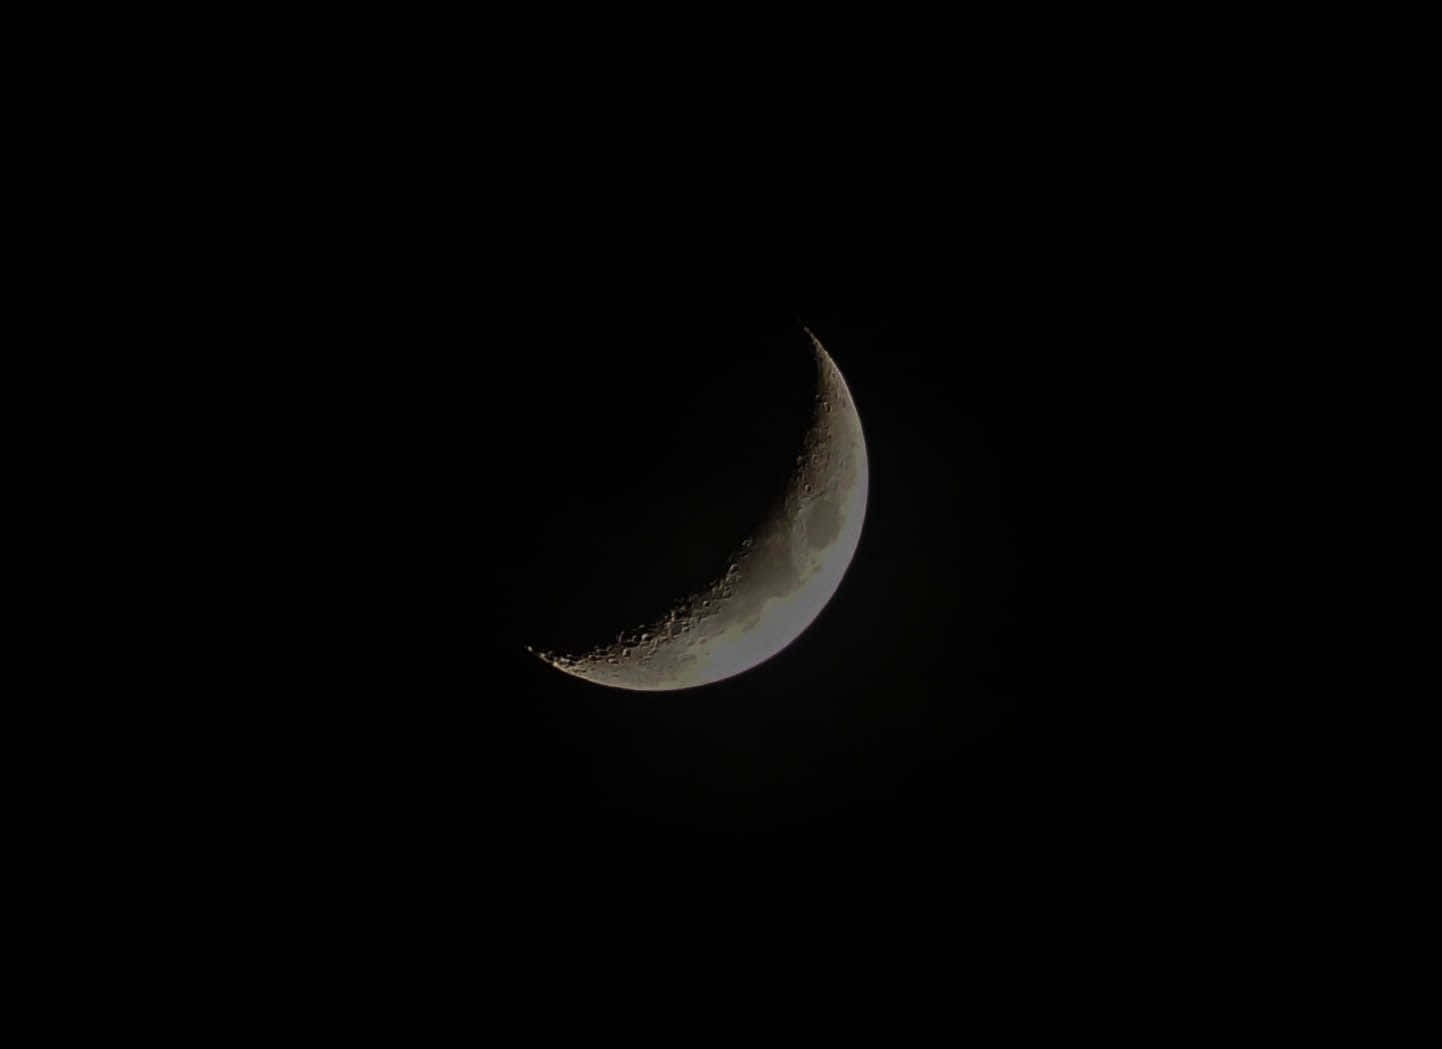 Dark Moon Illuminating the Night Sky Wallpaper